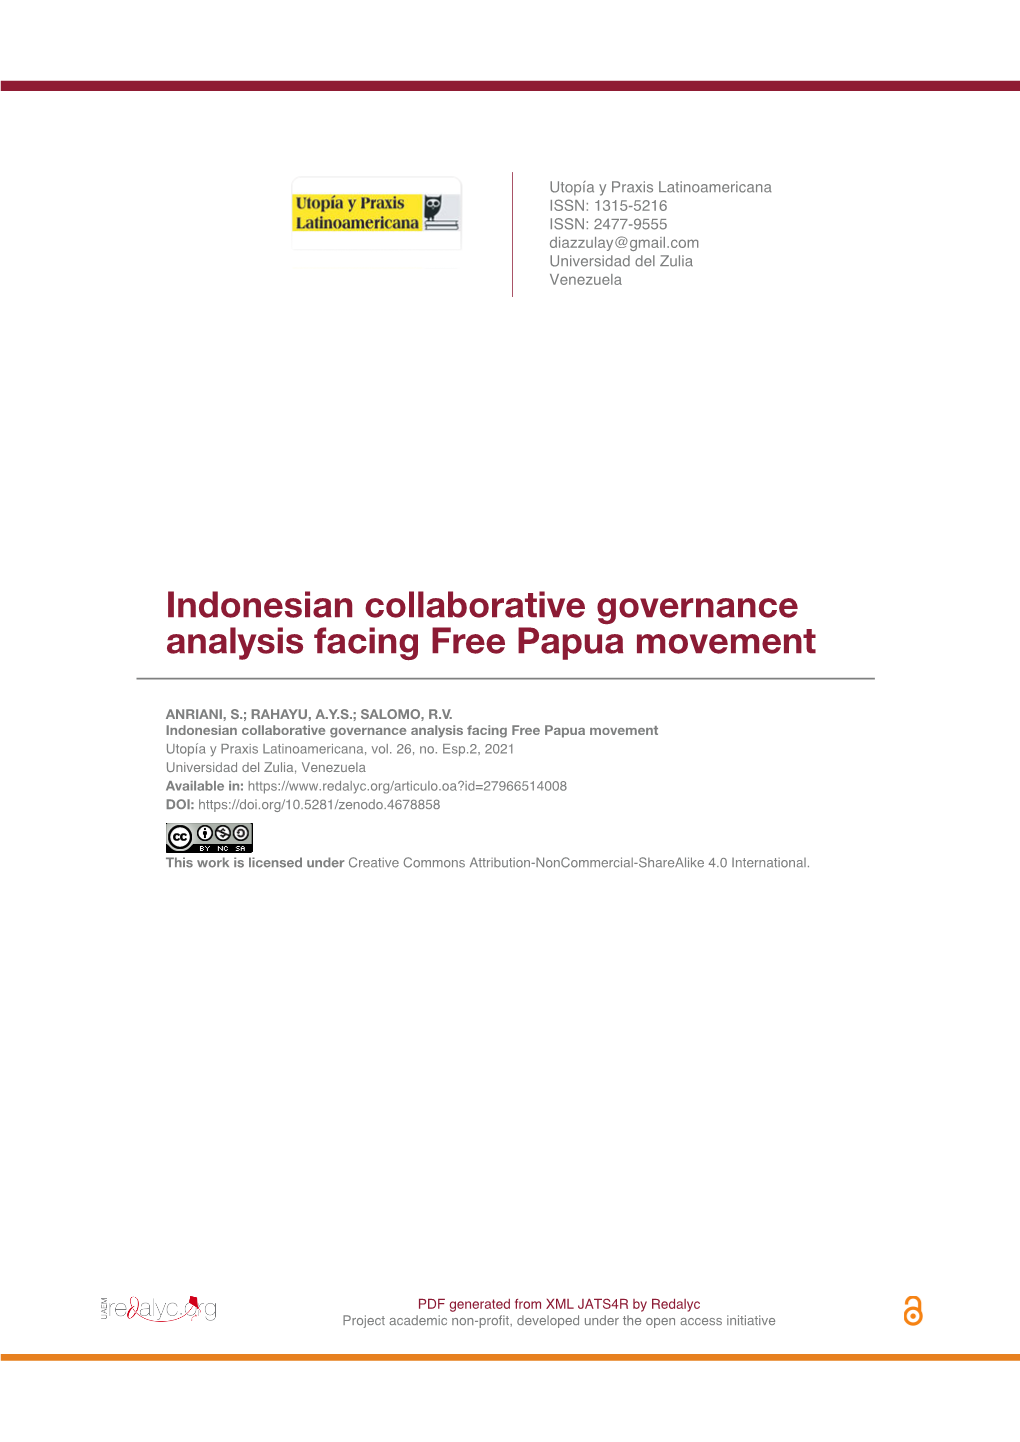 Indonesian Collaborative Governance Analysis Facing Free Papua Movement